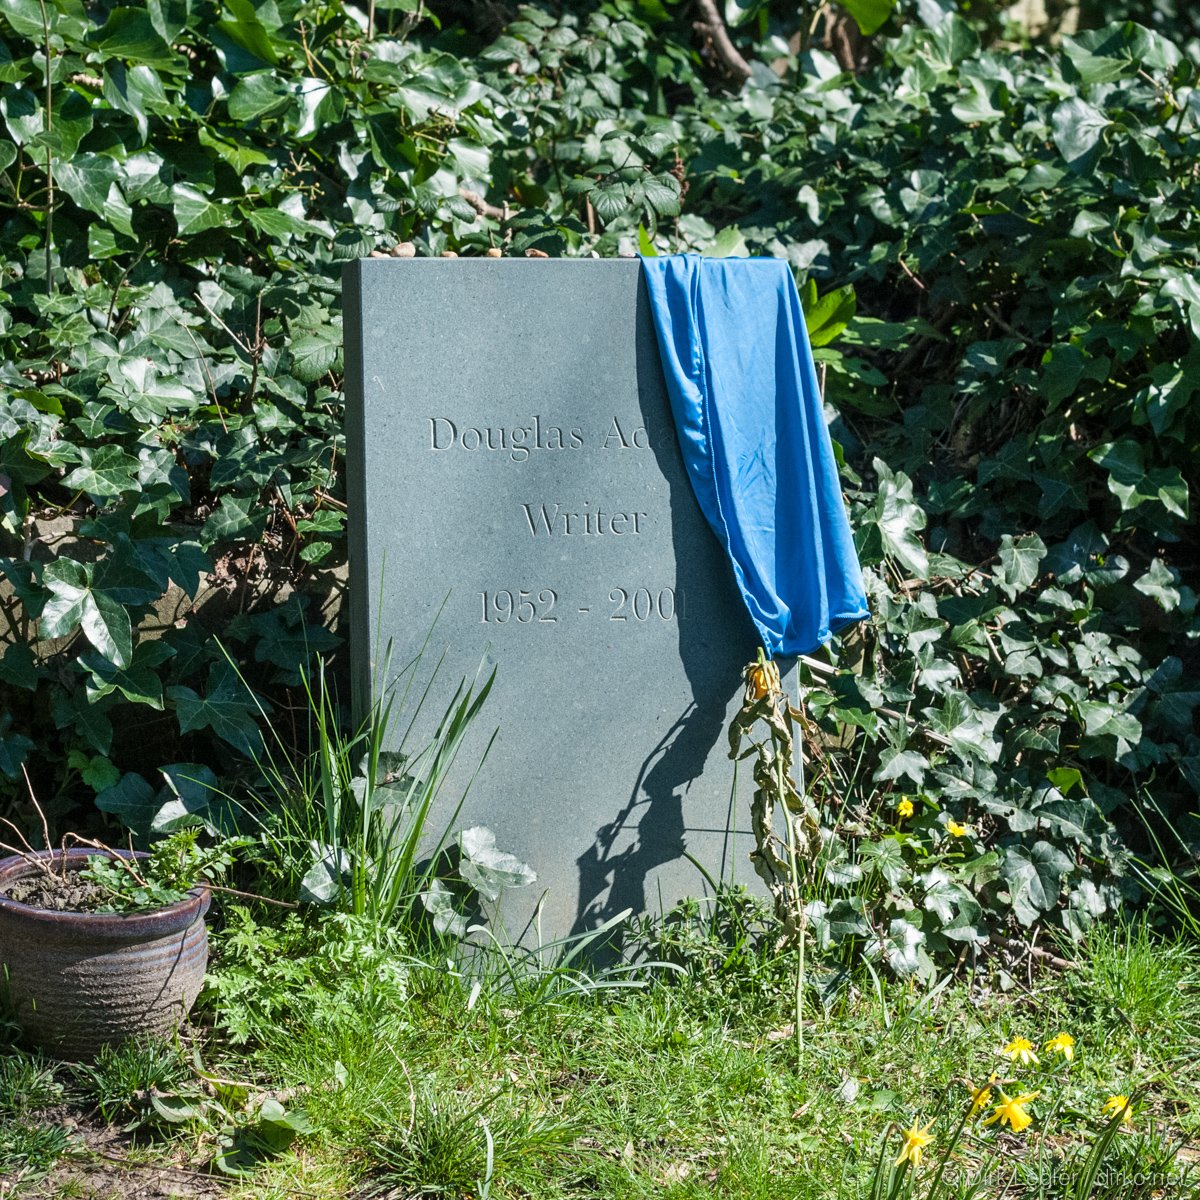 Dougles Adams' grave, Highgate Cemetery, London